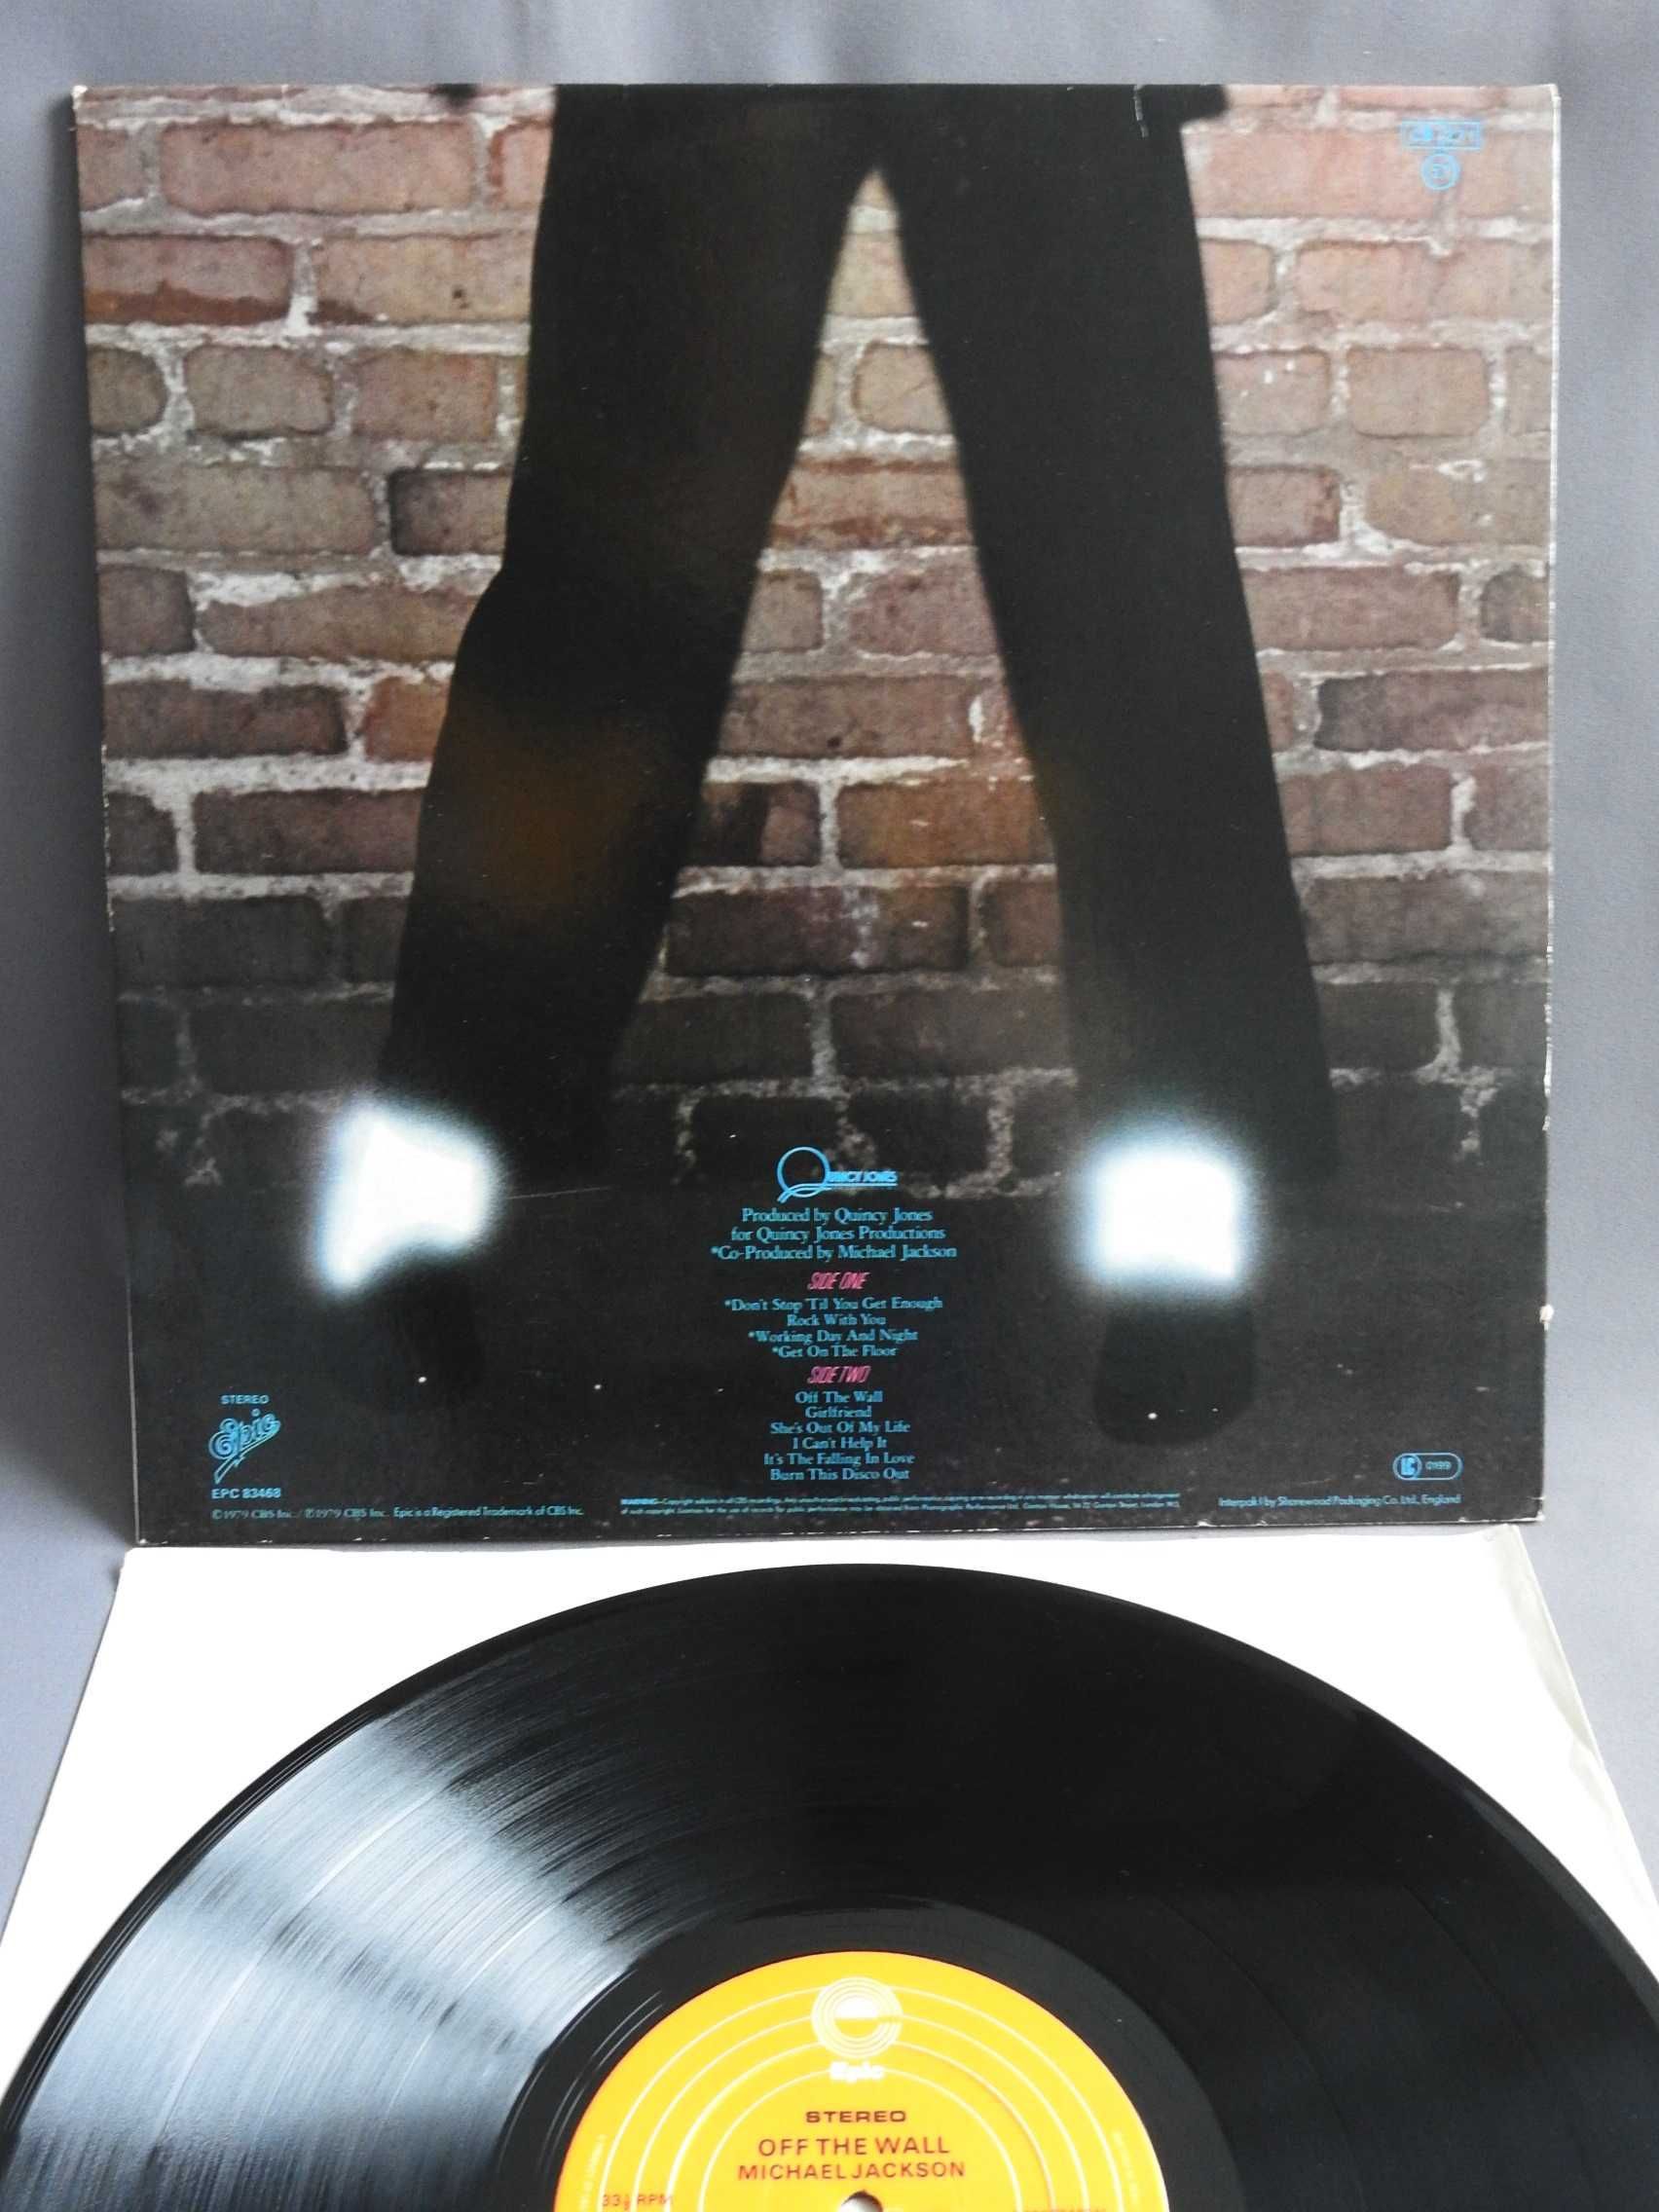 Michael Jackson ‎Off The Wall 1979 пластинка UK NM 1 press Британия